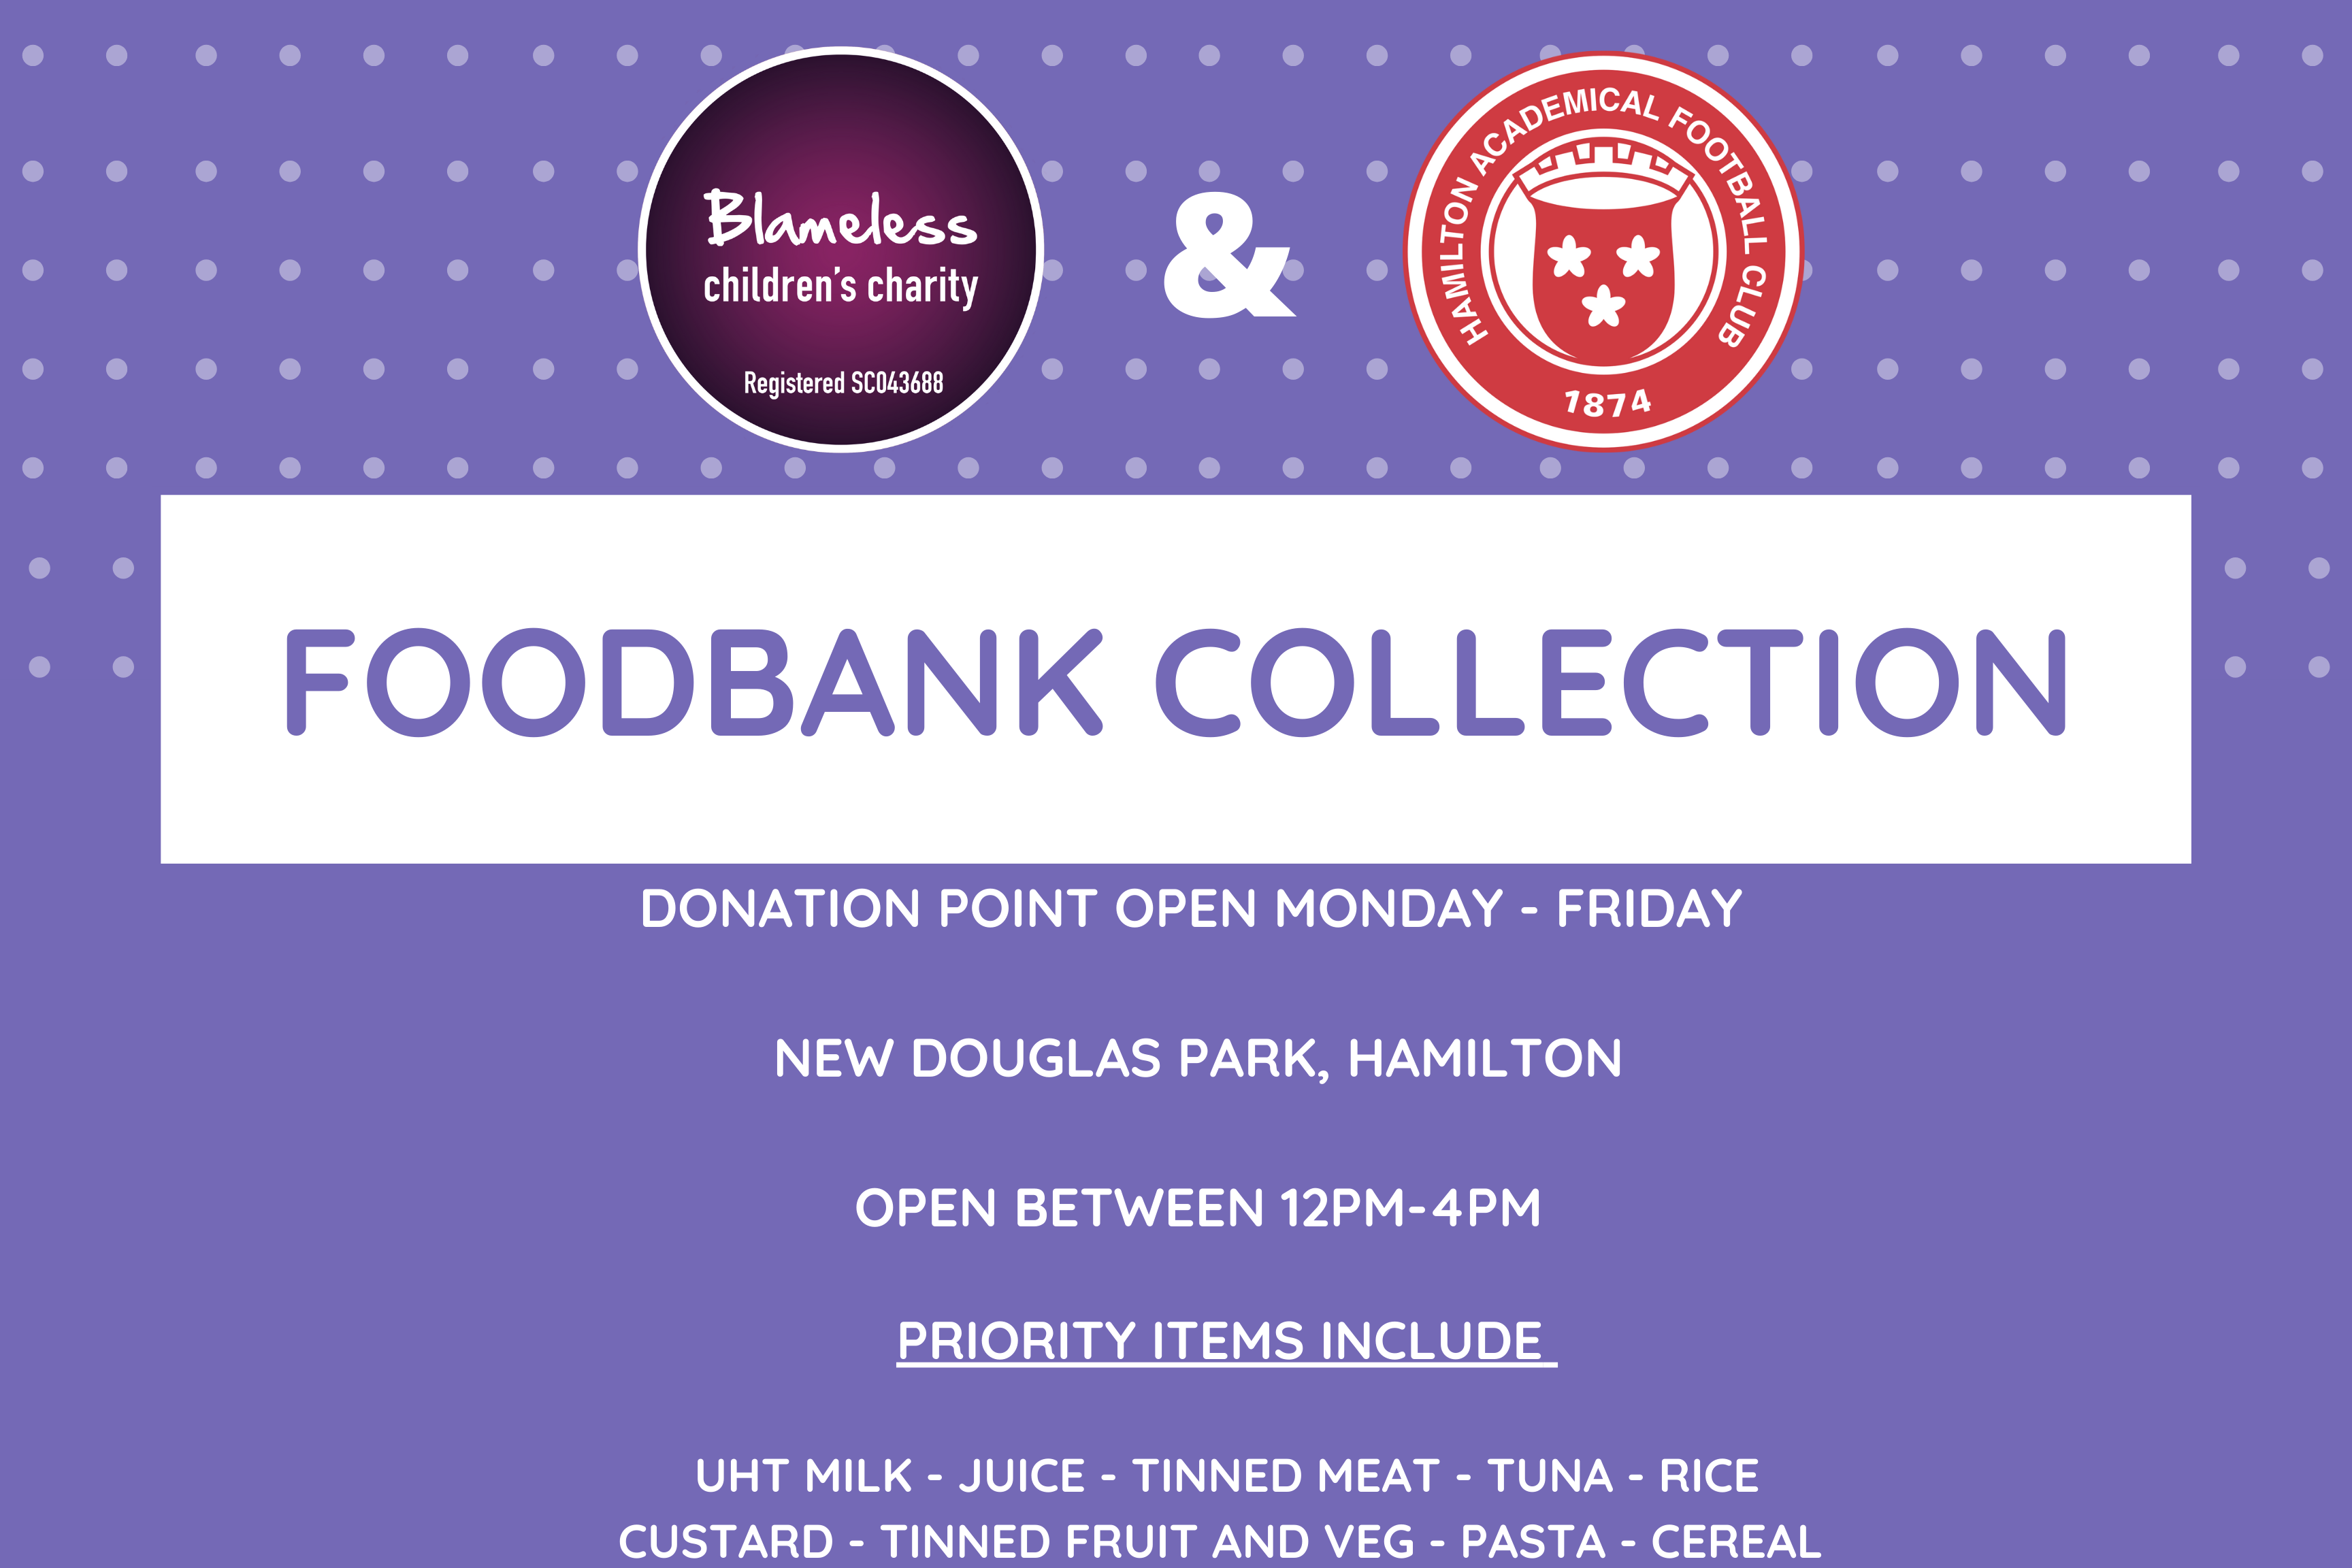 Blameless to join foodbank donation service beginning next week